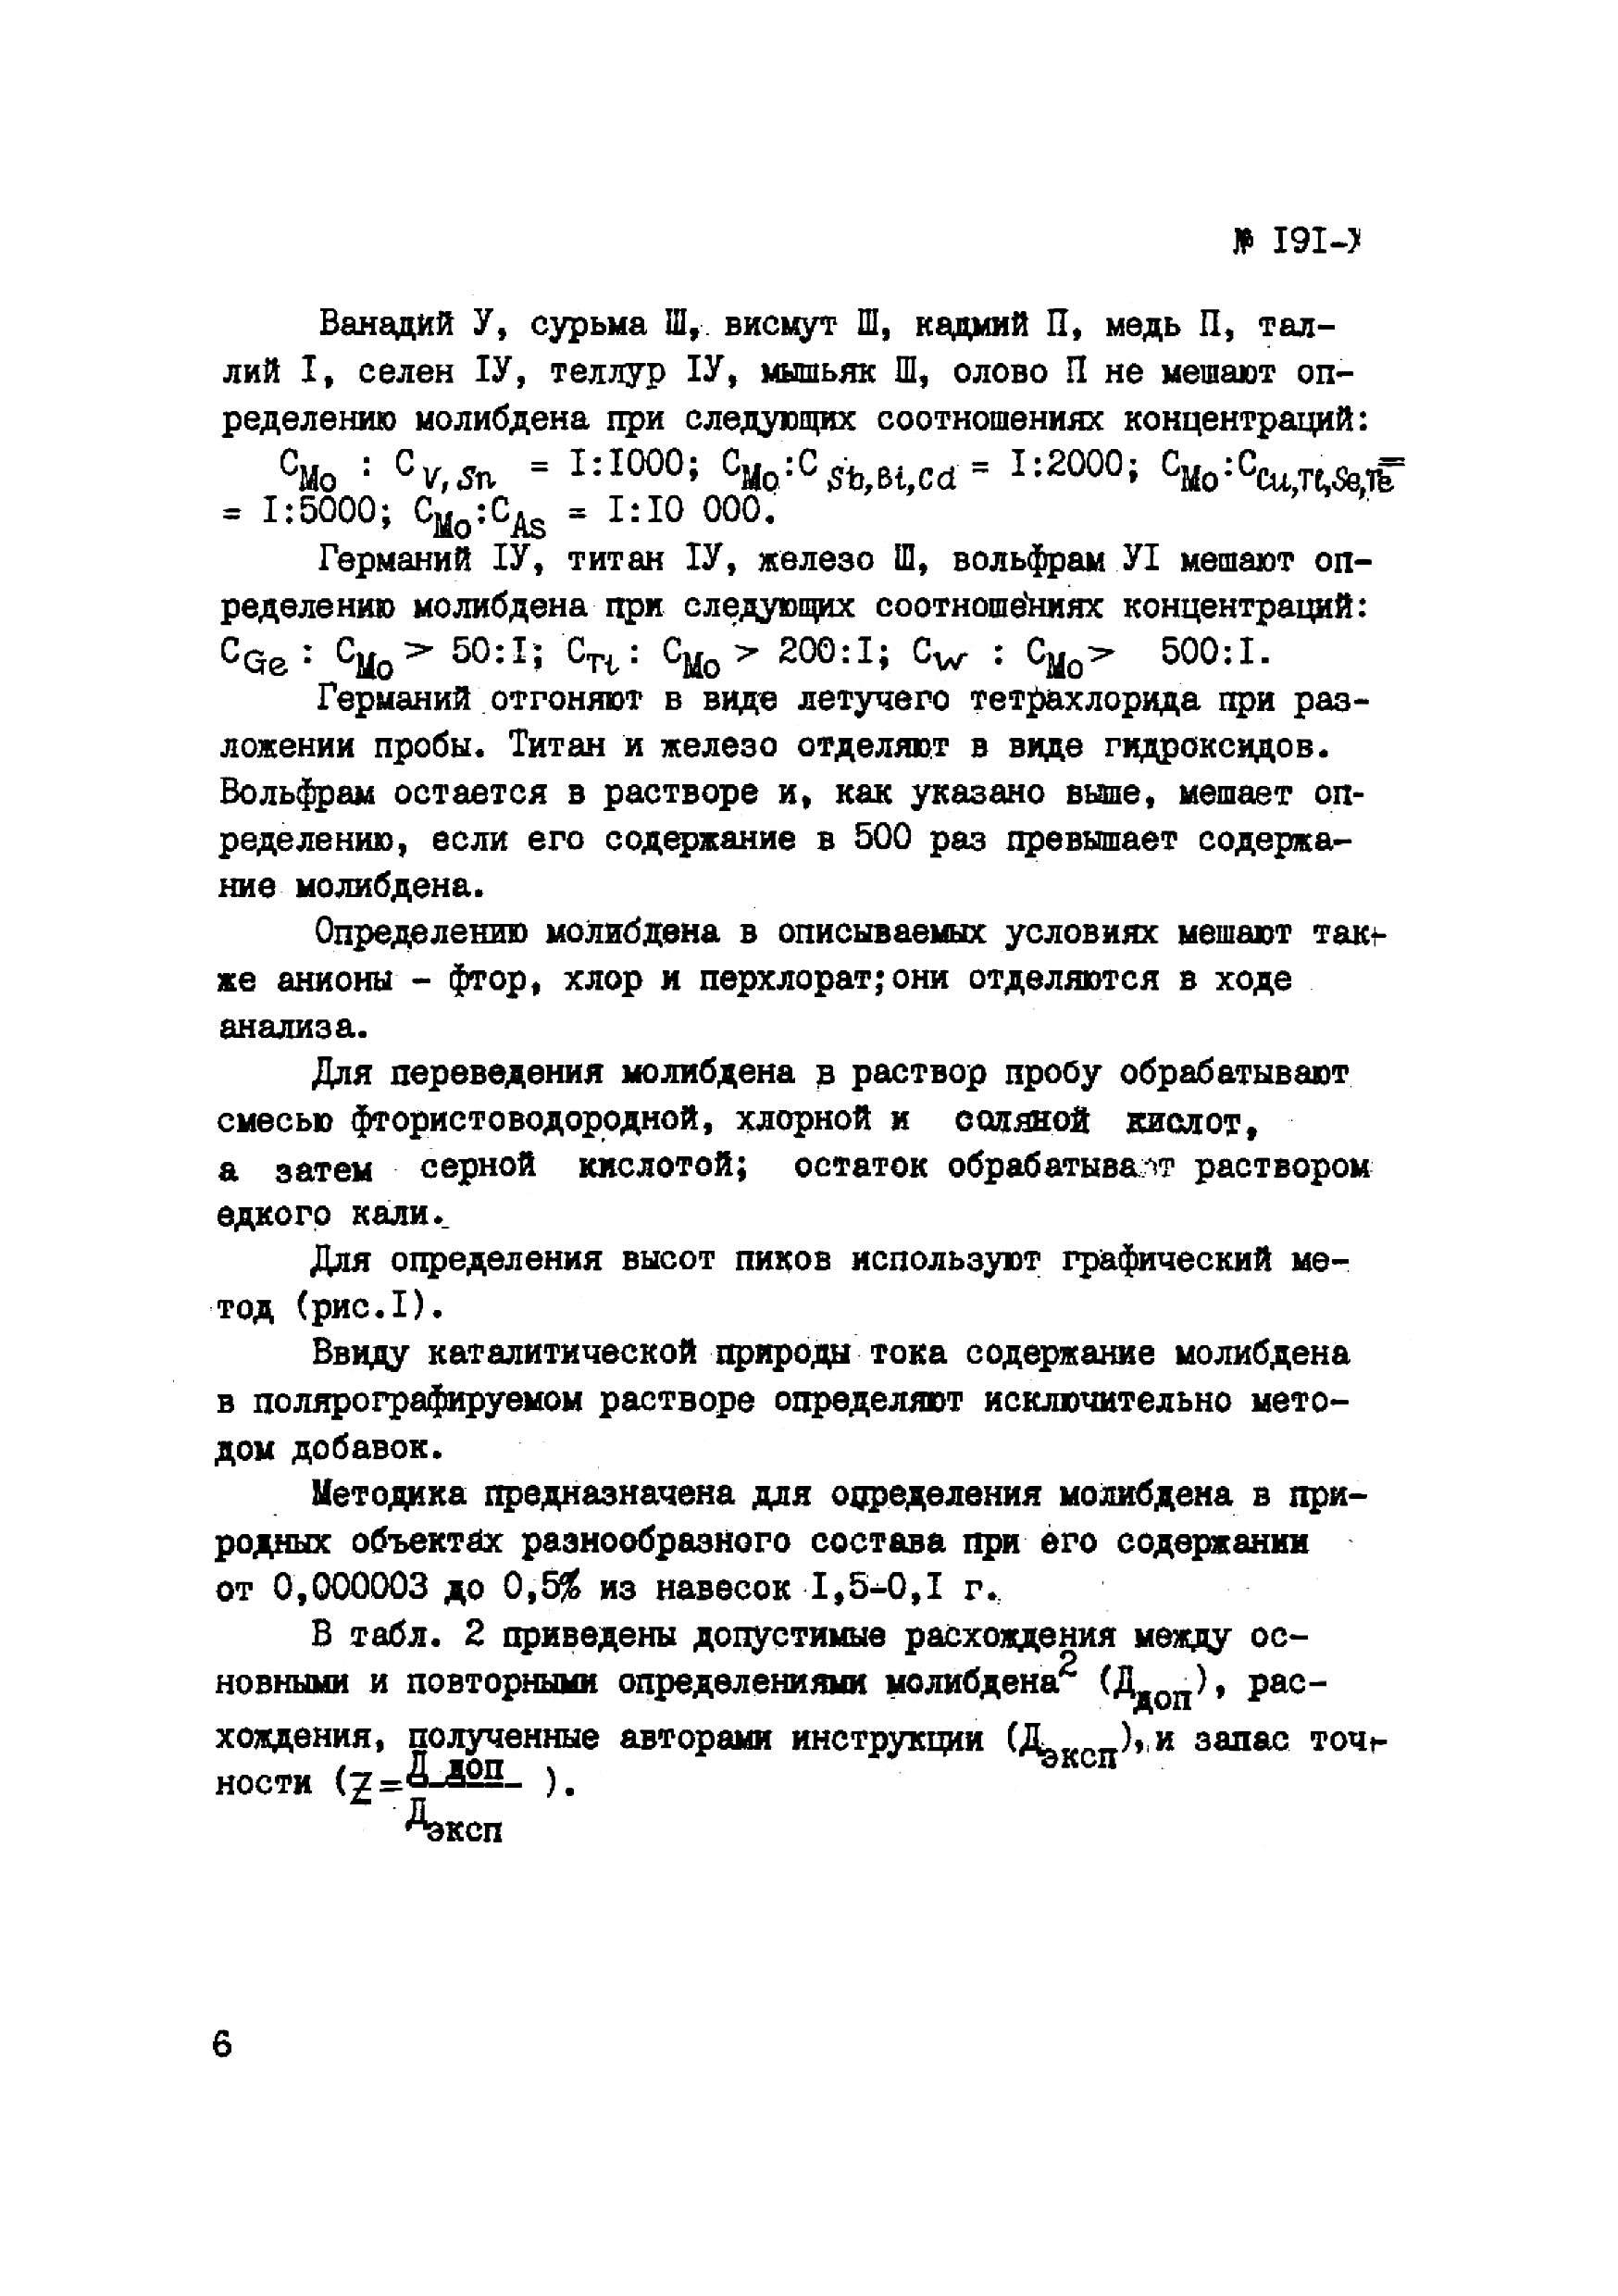 Инструкция НСАМ 191-Х